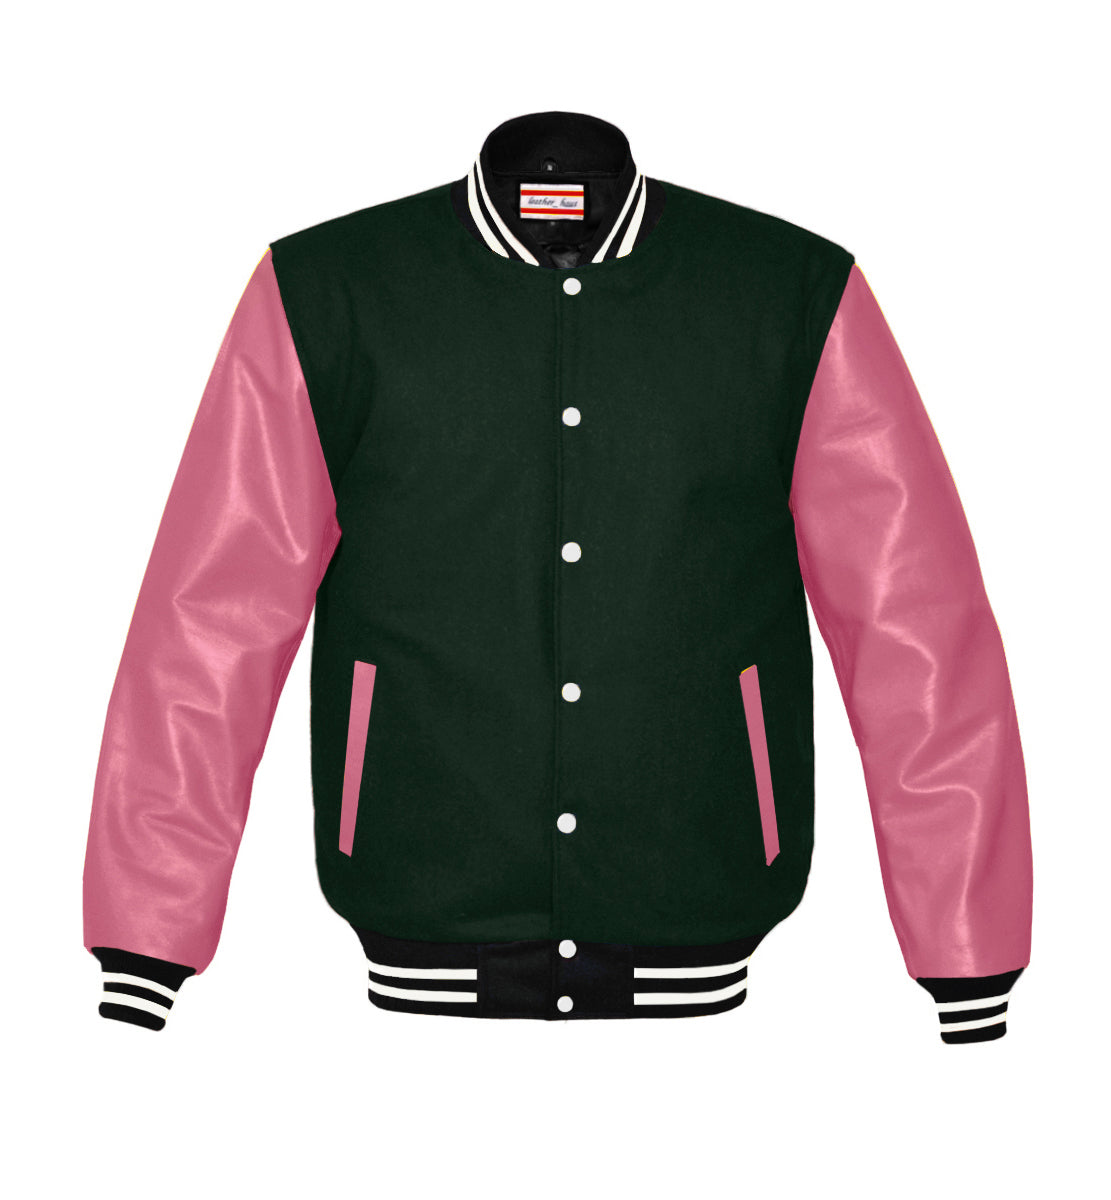 Styling Vandy the Pink Varsity Jacket(CPFM, Jil Sander, and vtg leather  pants) 